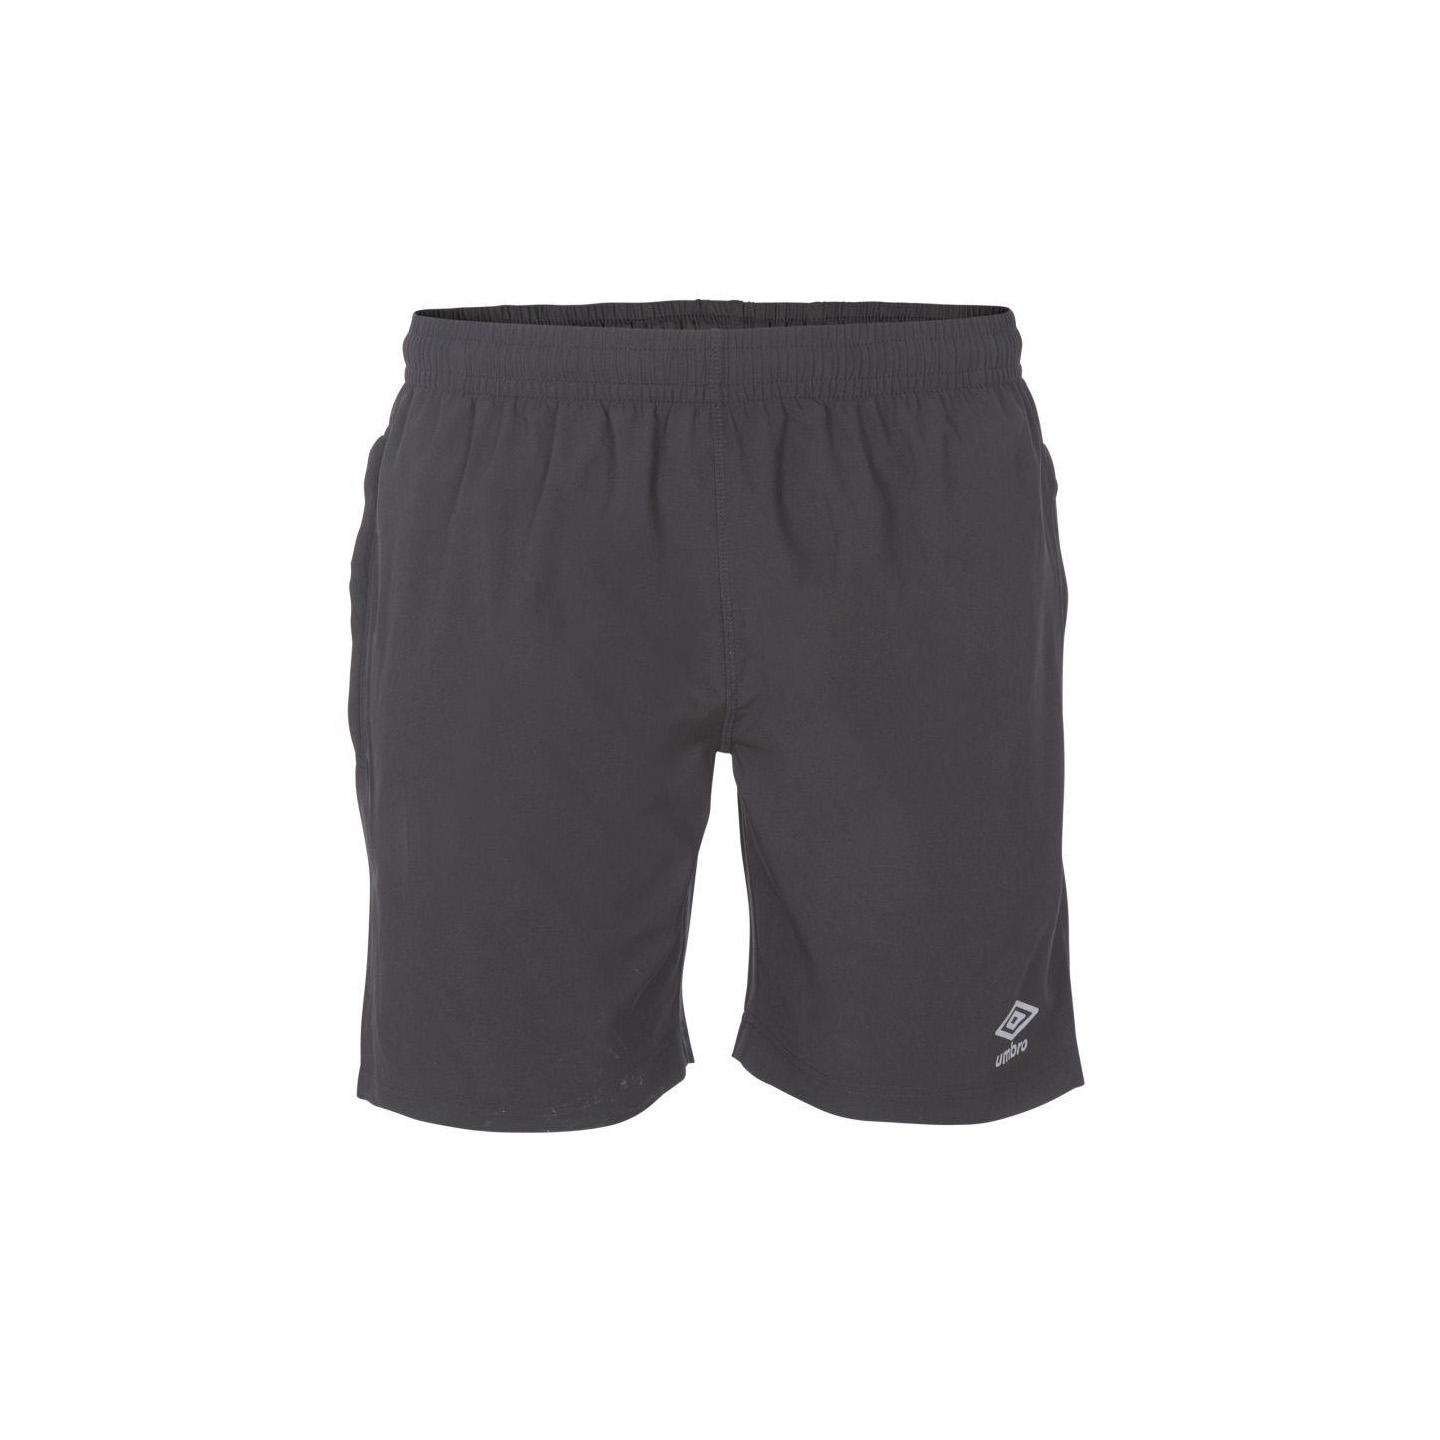 Umbro Core Woven Shorts